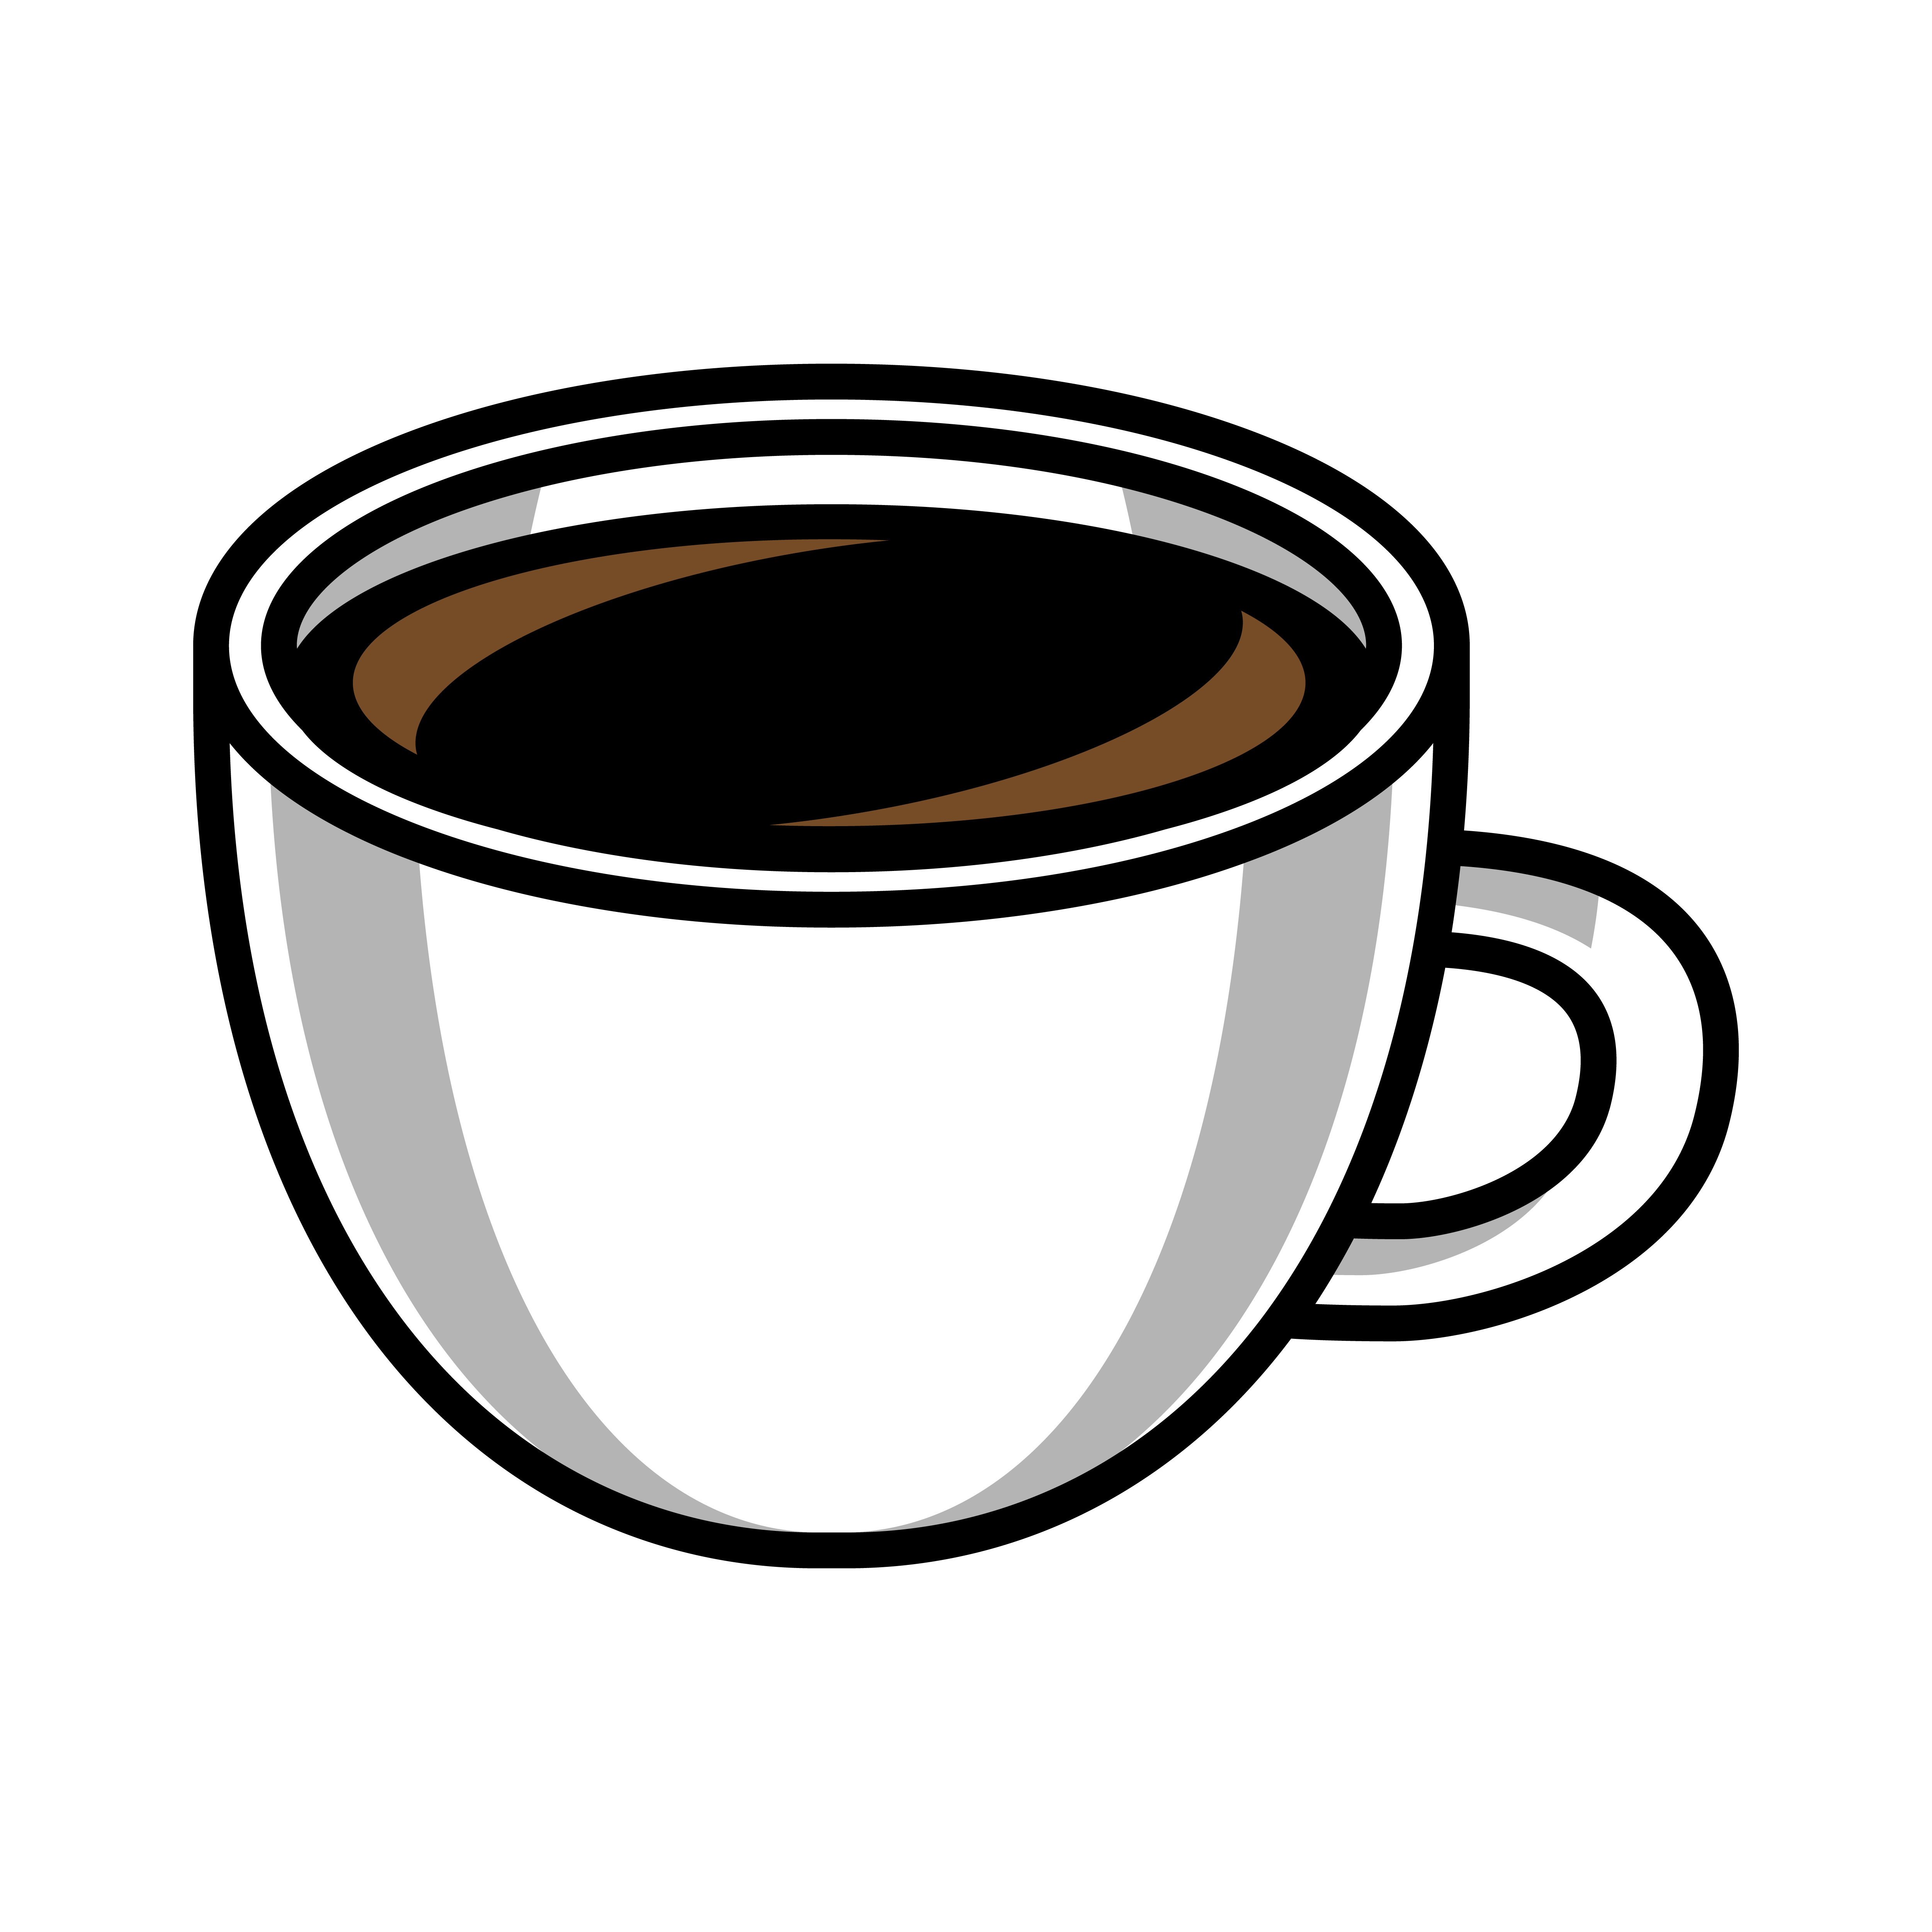 Download Coffee Drink vector icon - Download Free Vectors, Clipart Graphics & Vector Art